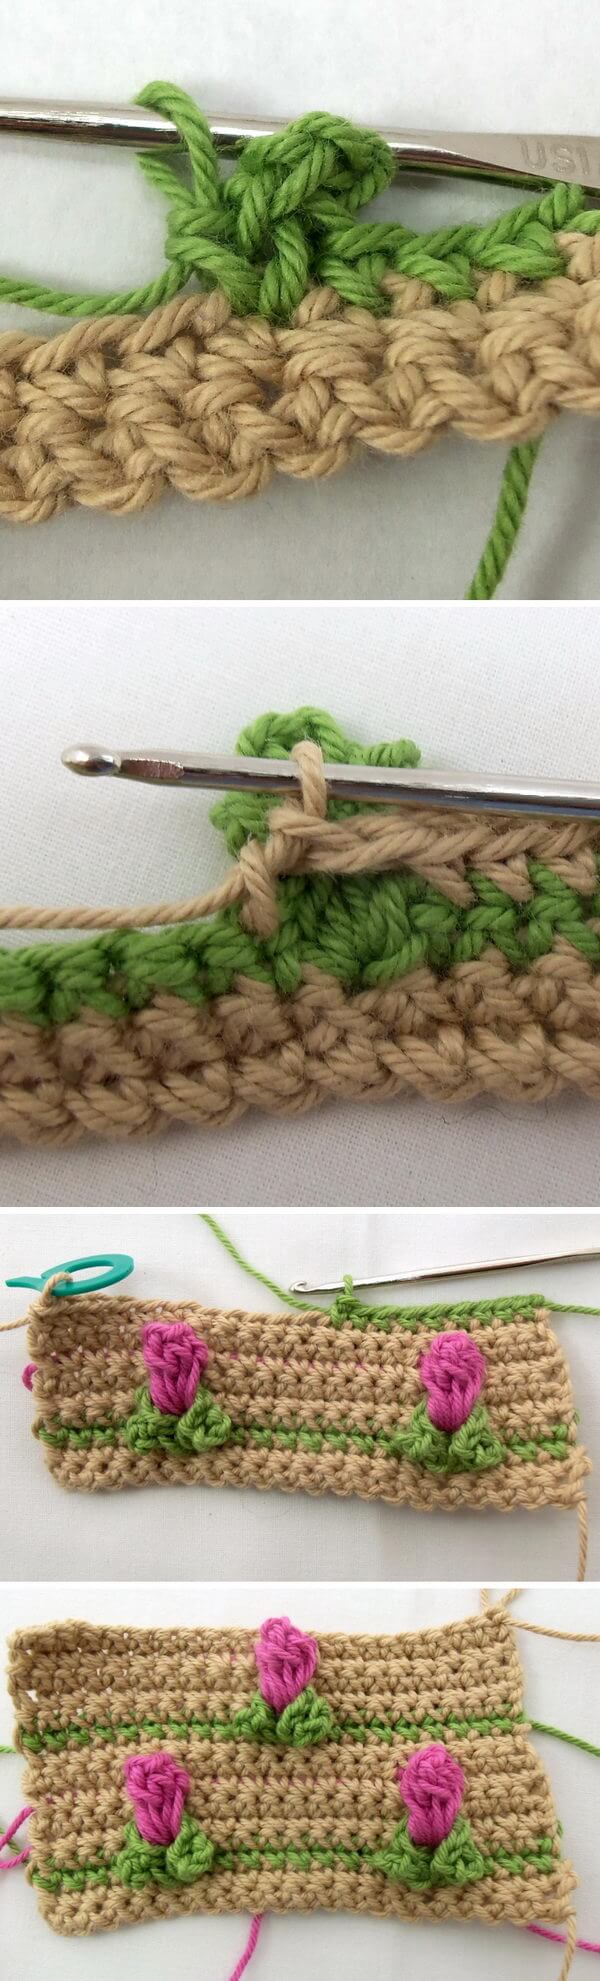 The crochet rosebud flower stitch